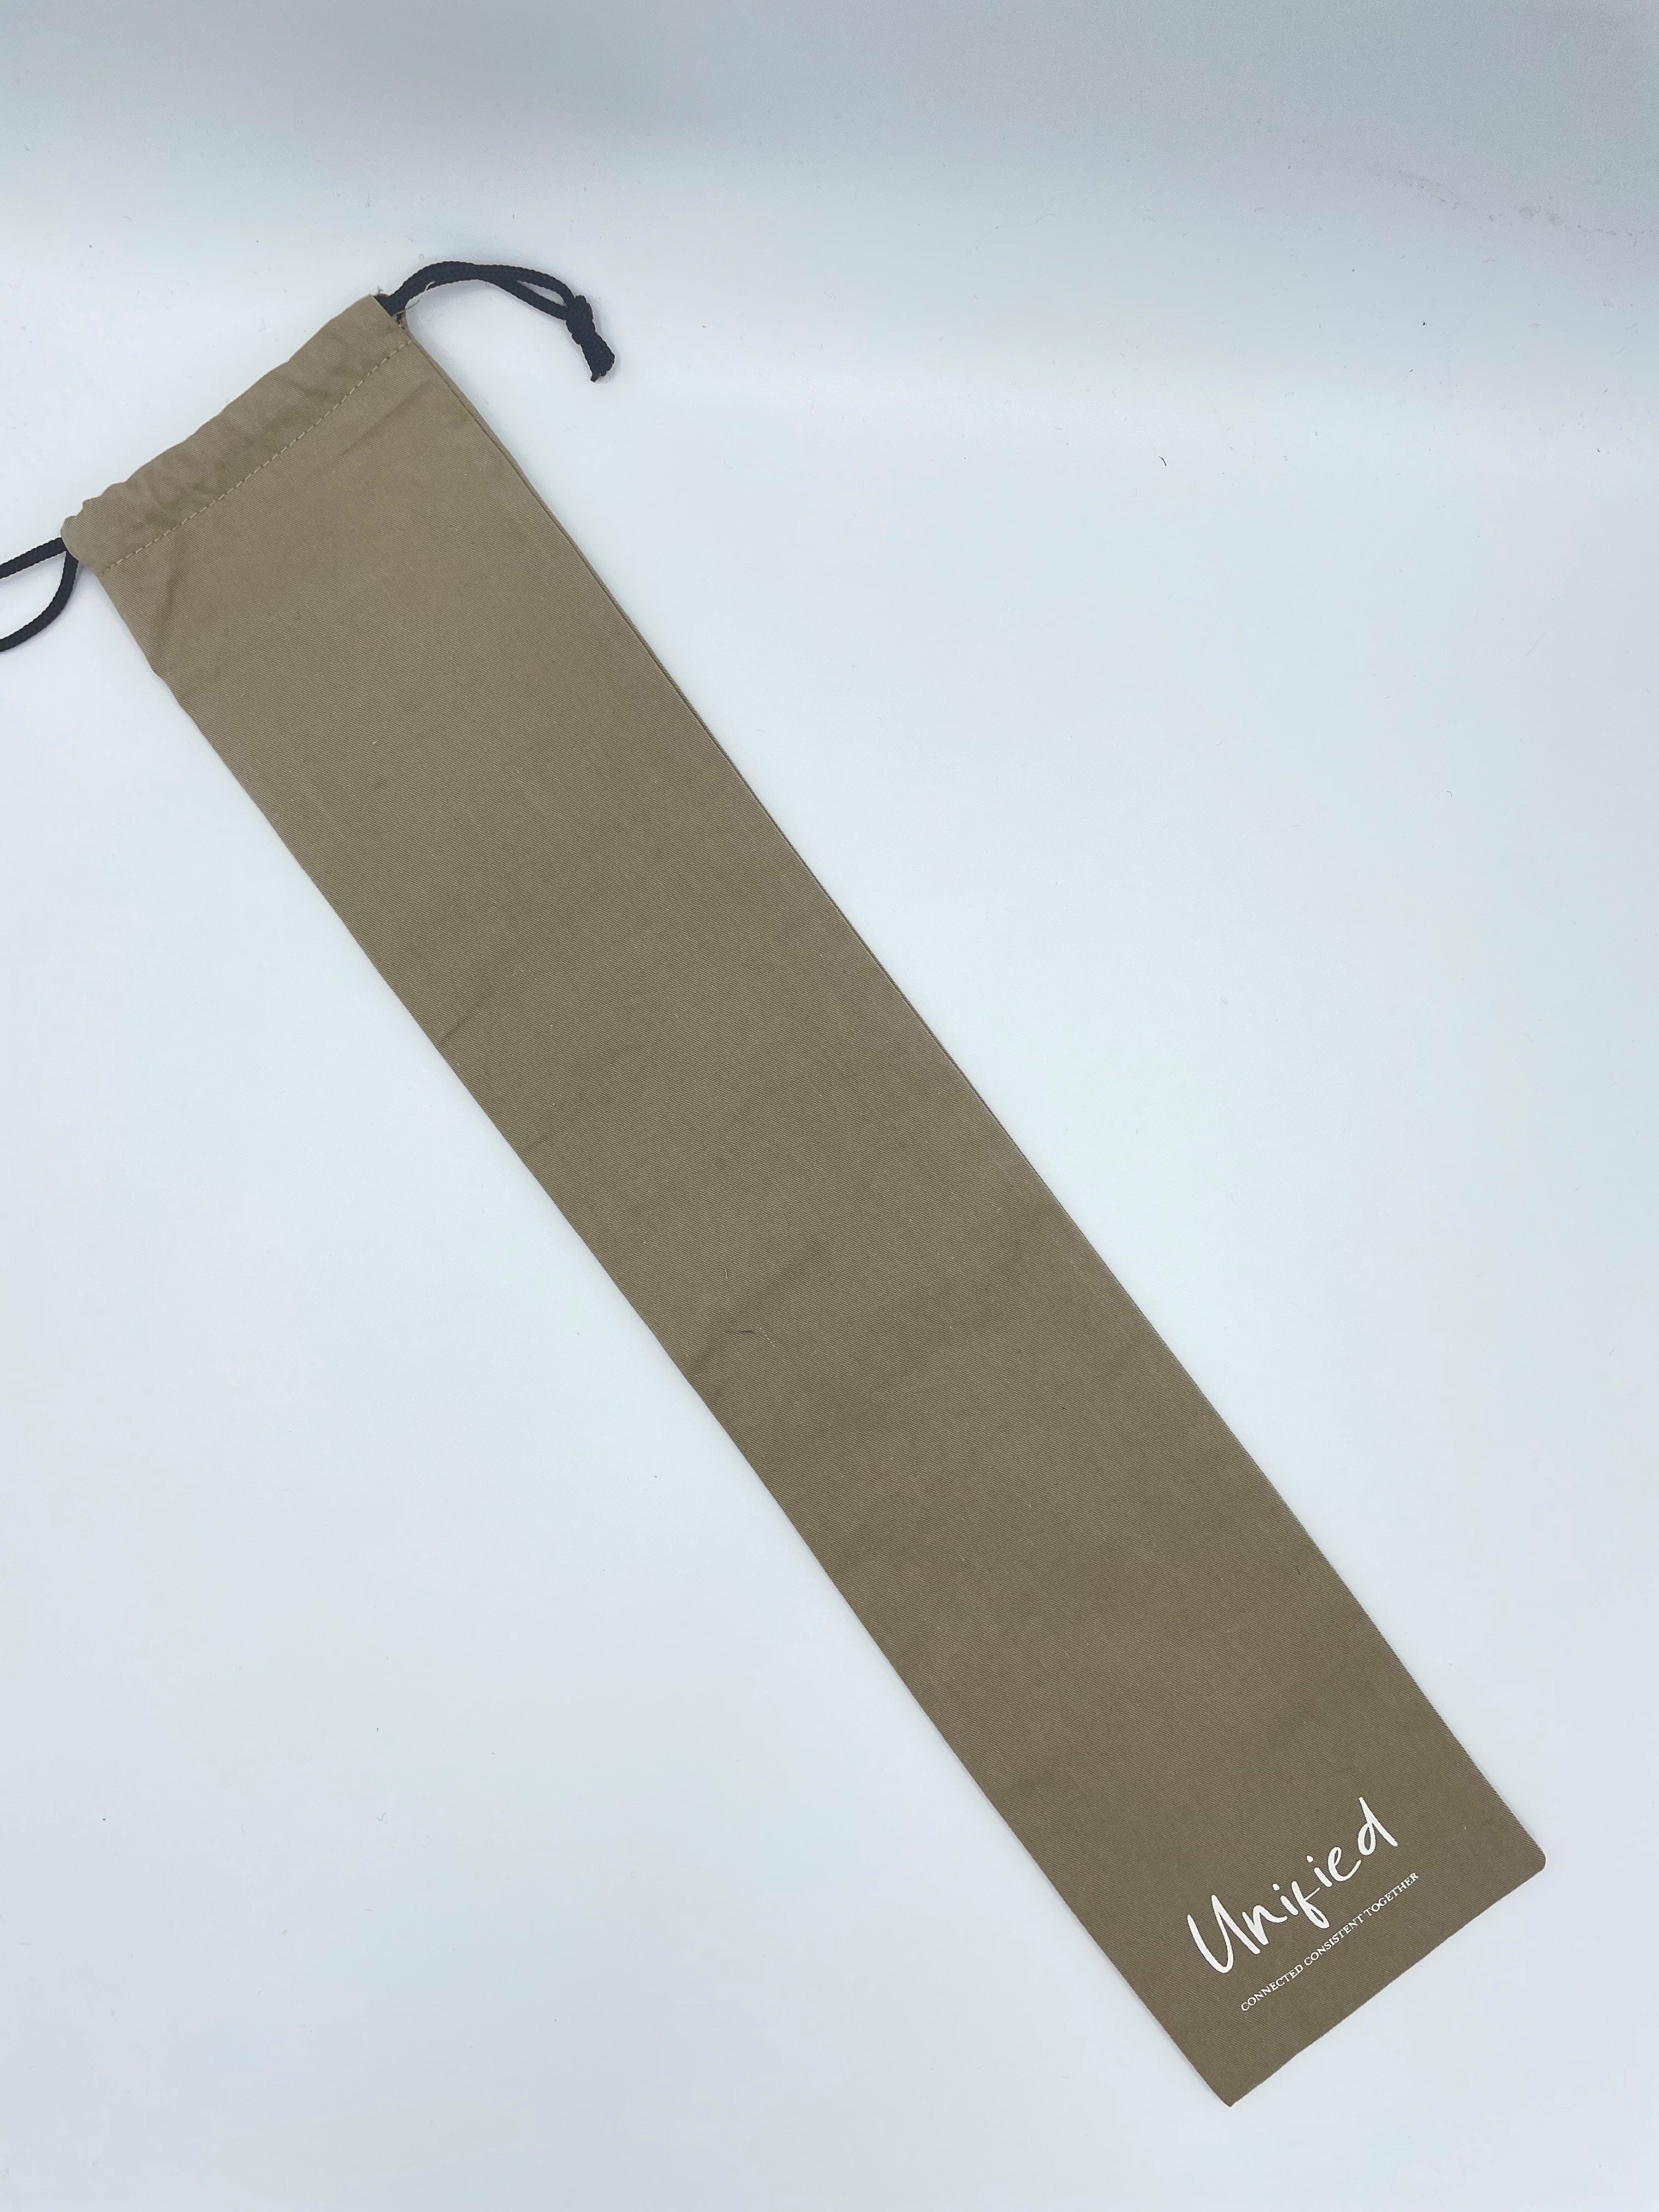 Formal tie storage bag by Unified UK